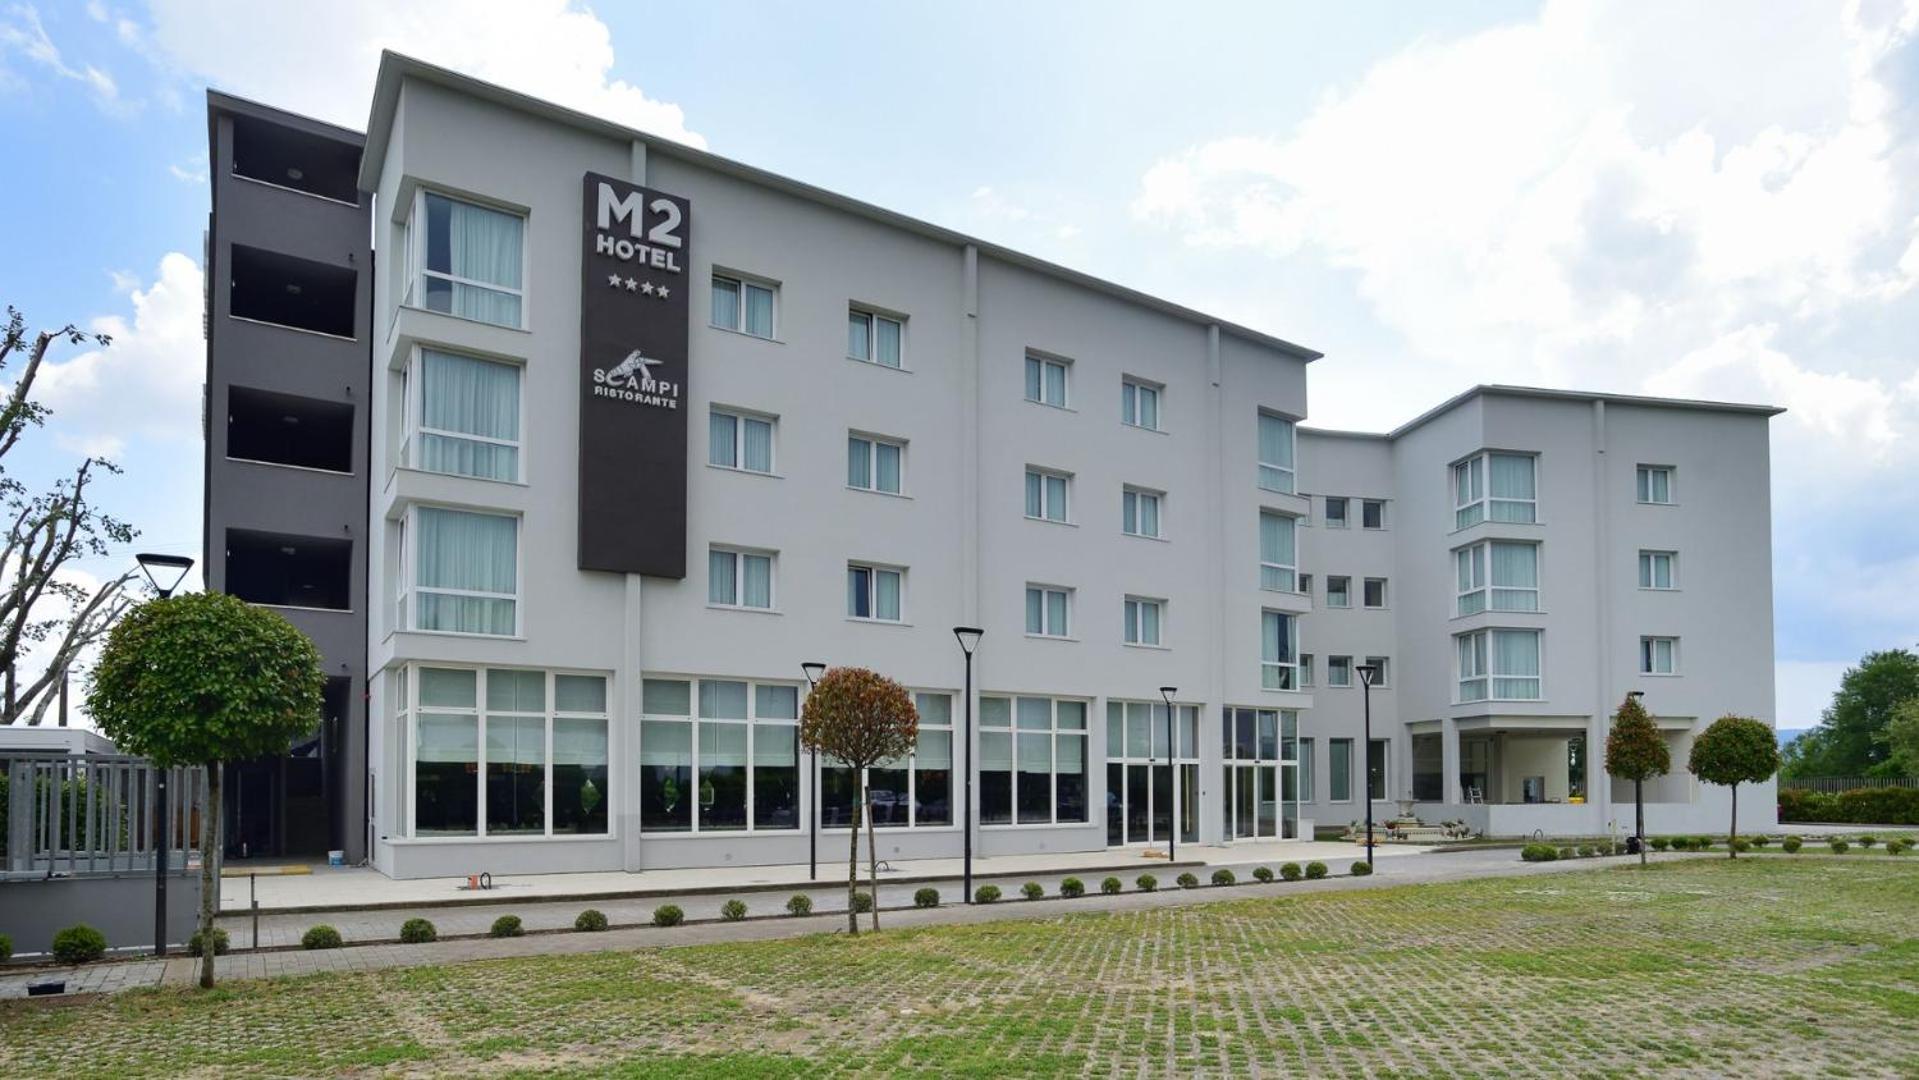 M2 Hotel